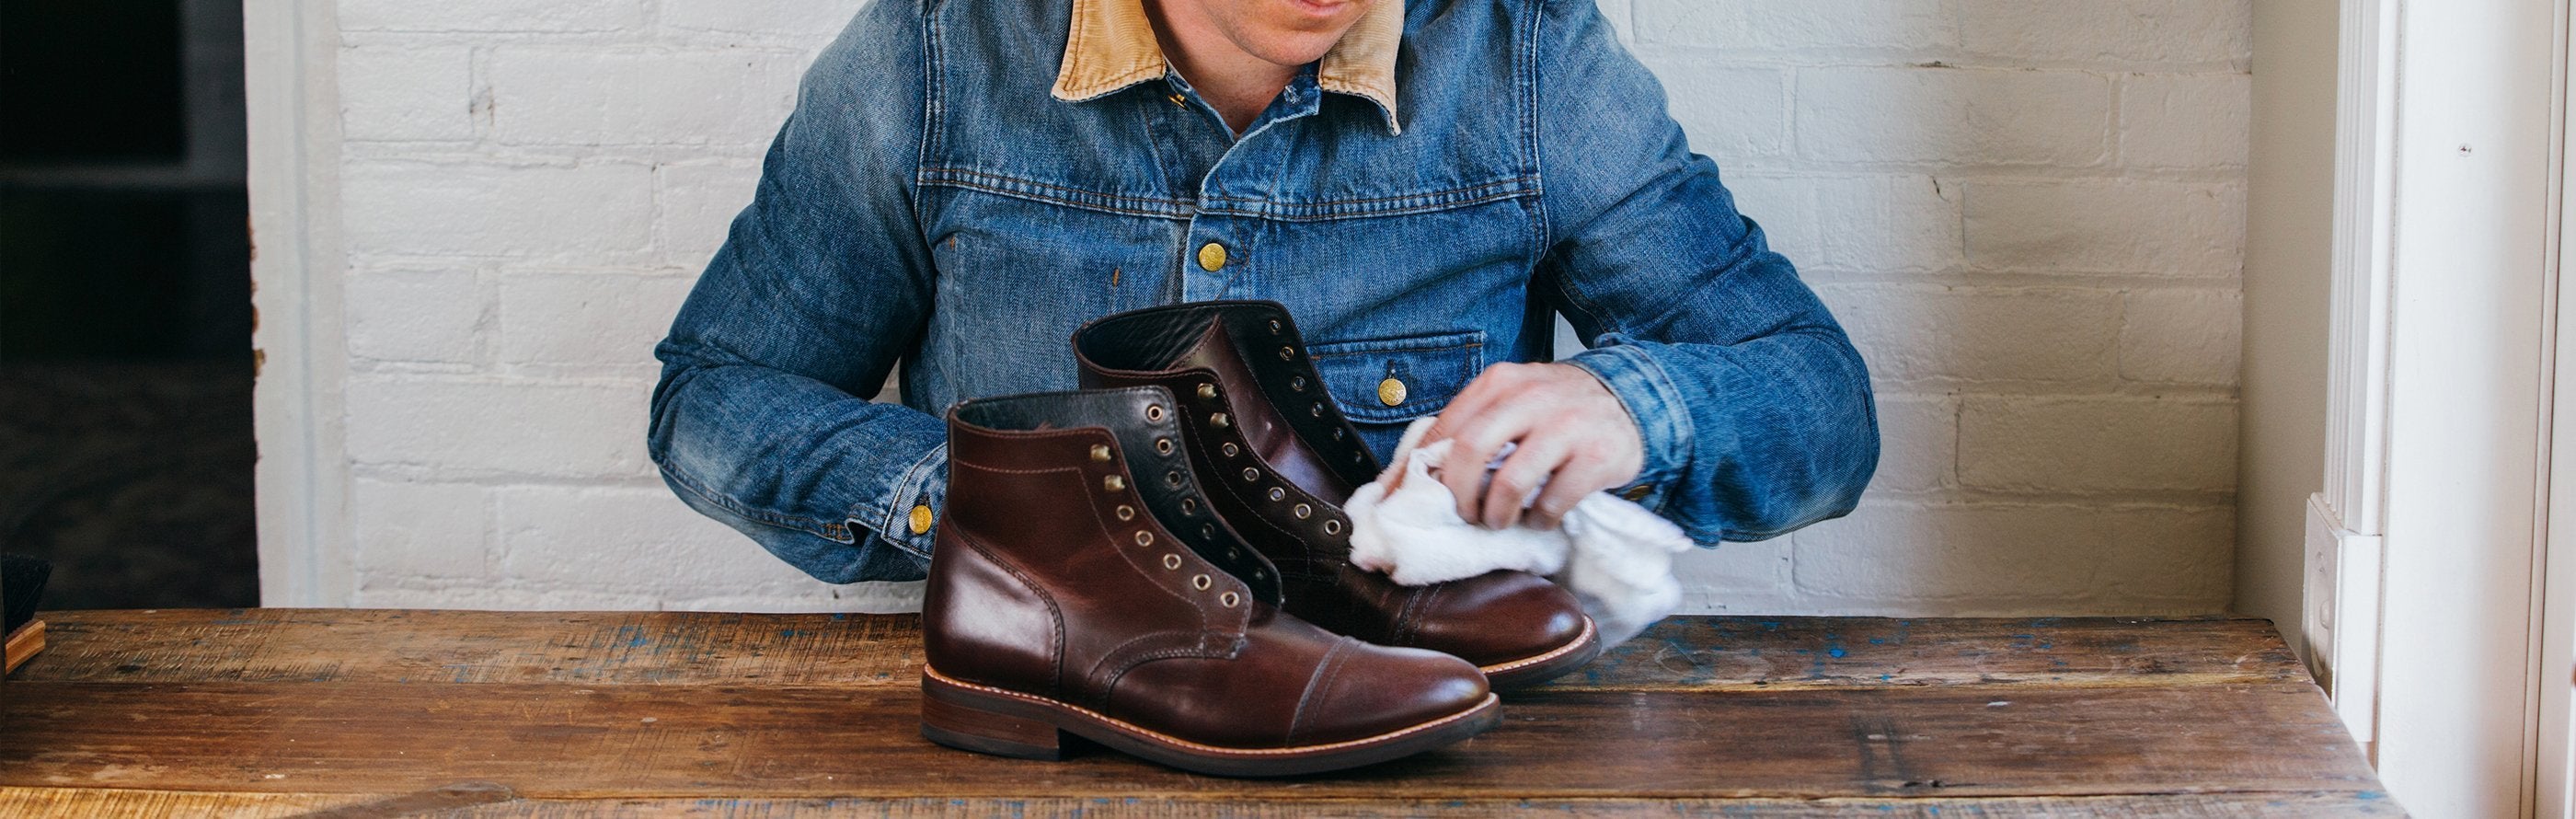 JOB SITE Premium Leather Boot & Shoe Polish Cream - Restores, Conditions &  Polishes - Neutral - 3 oz 